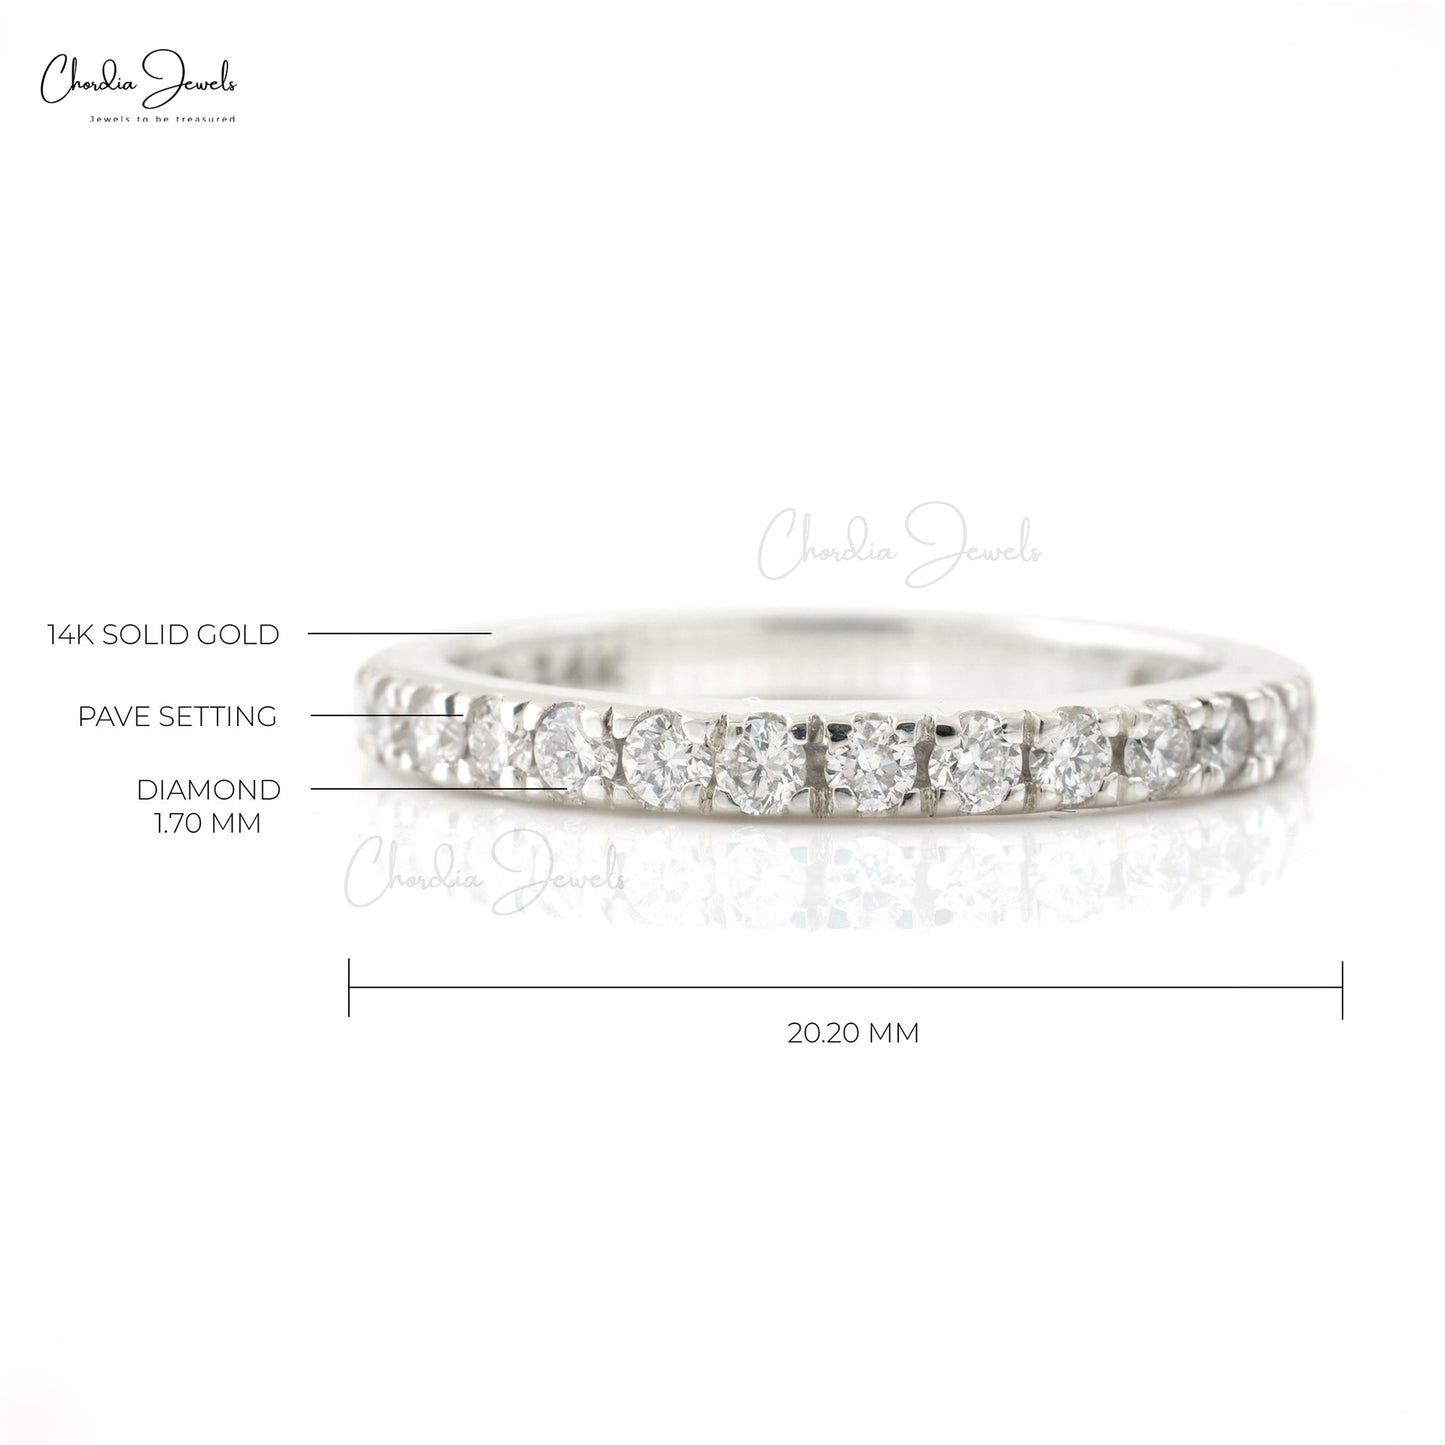 14k Solid White Gold Half Eternity Ring, 0.53 Carats G-H White Diamond Band, IGI Certified (Size 6)